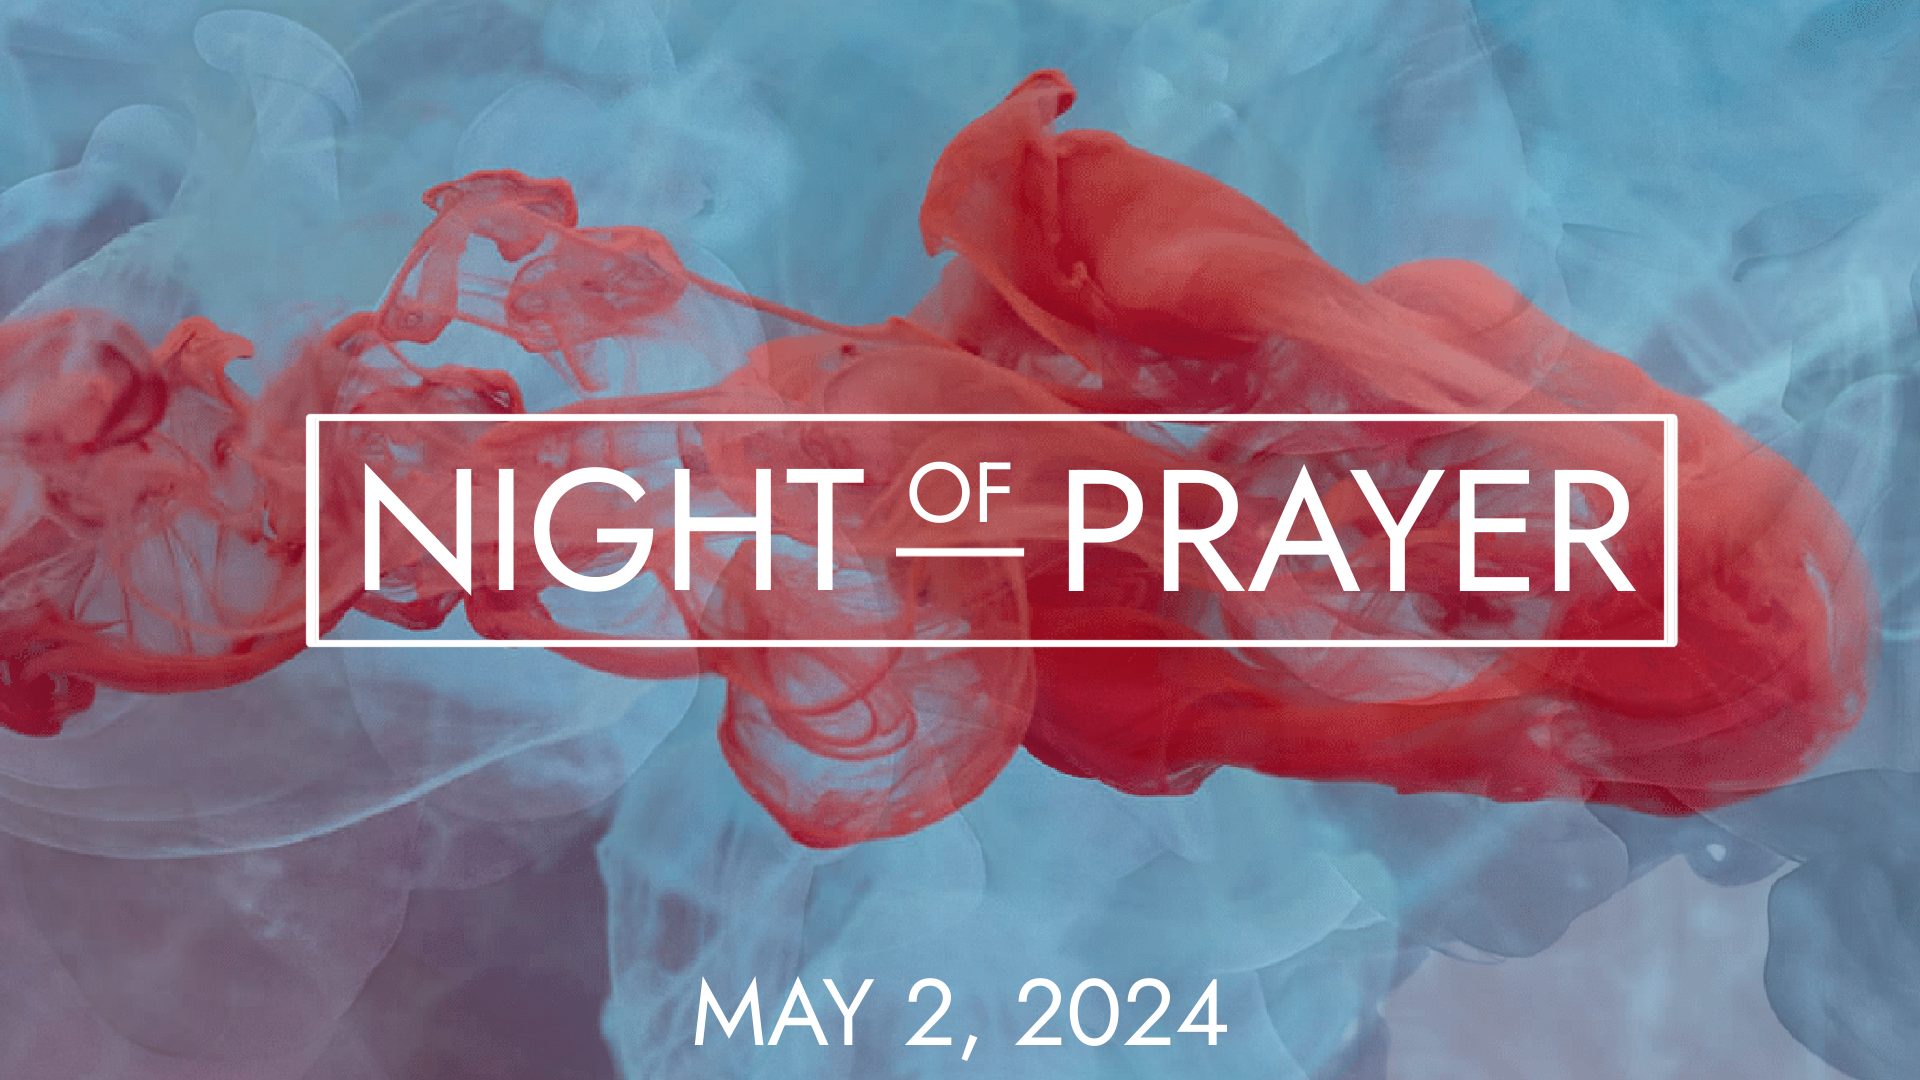 Night of Prayer TV date.png